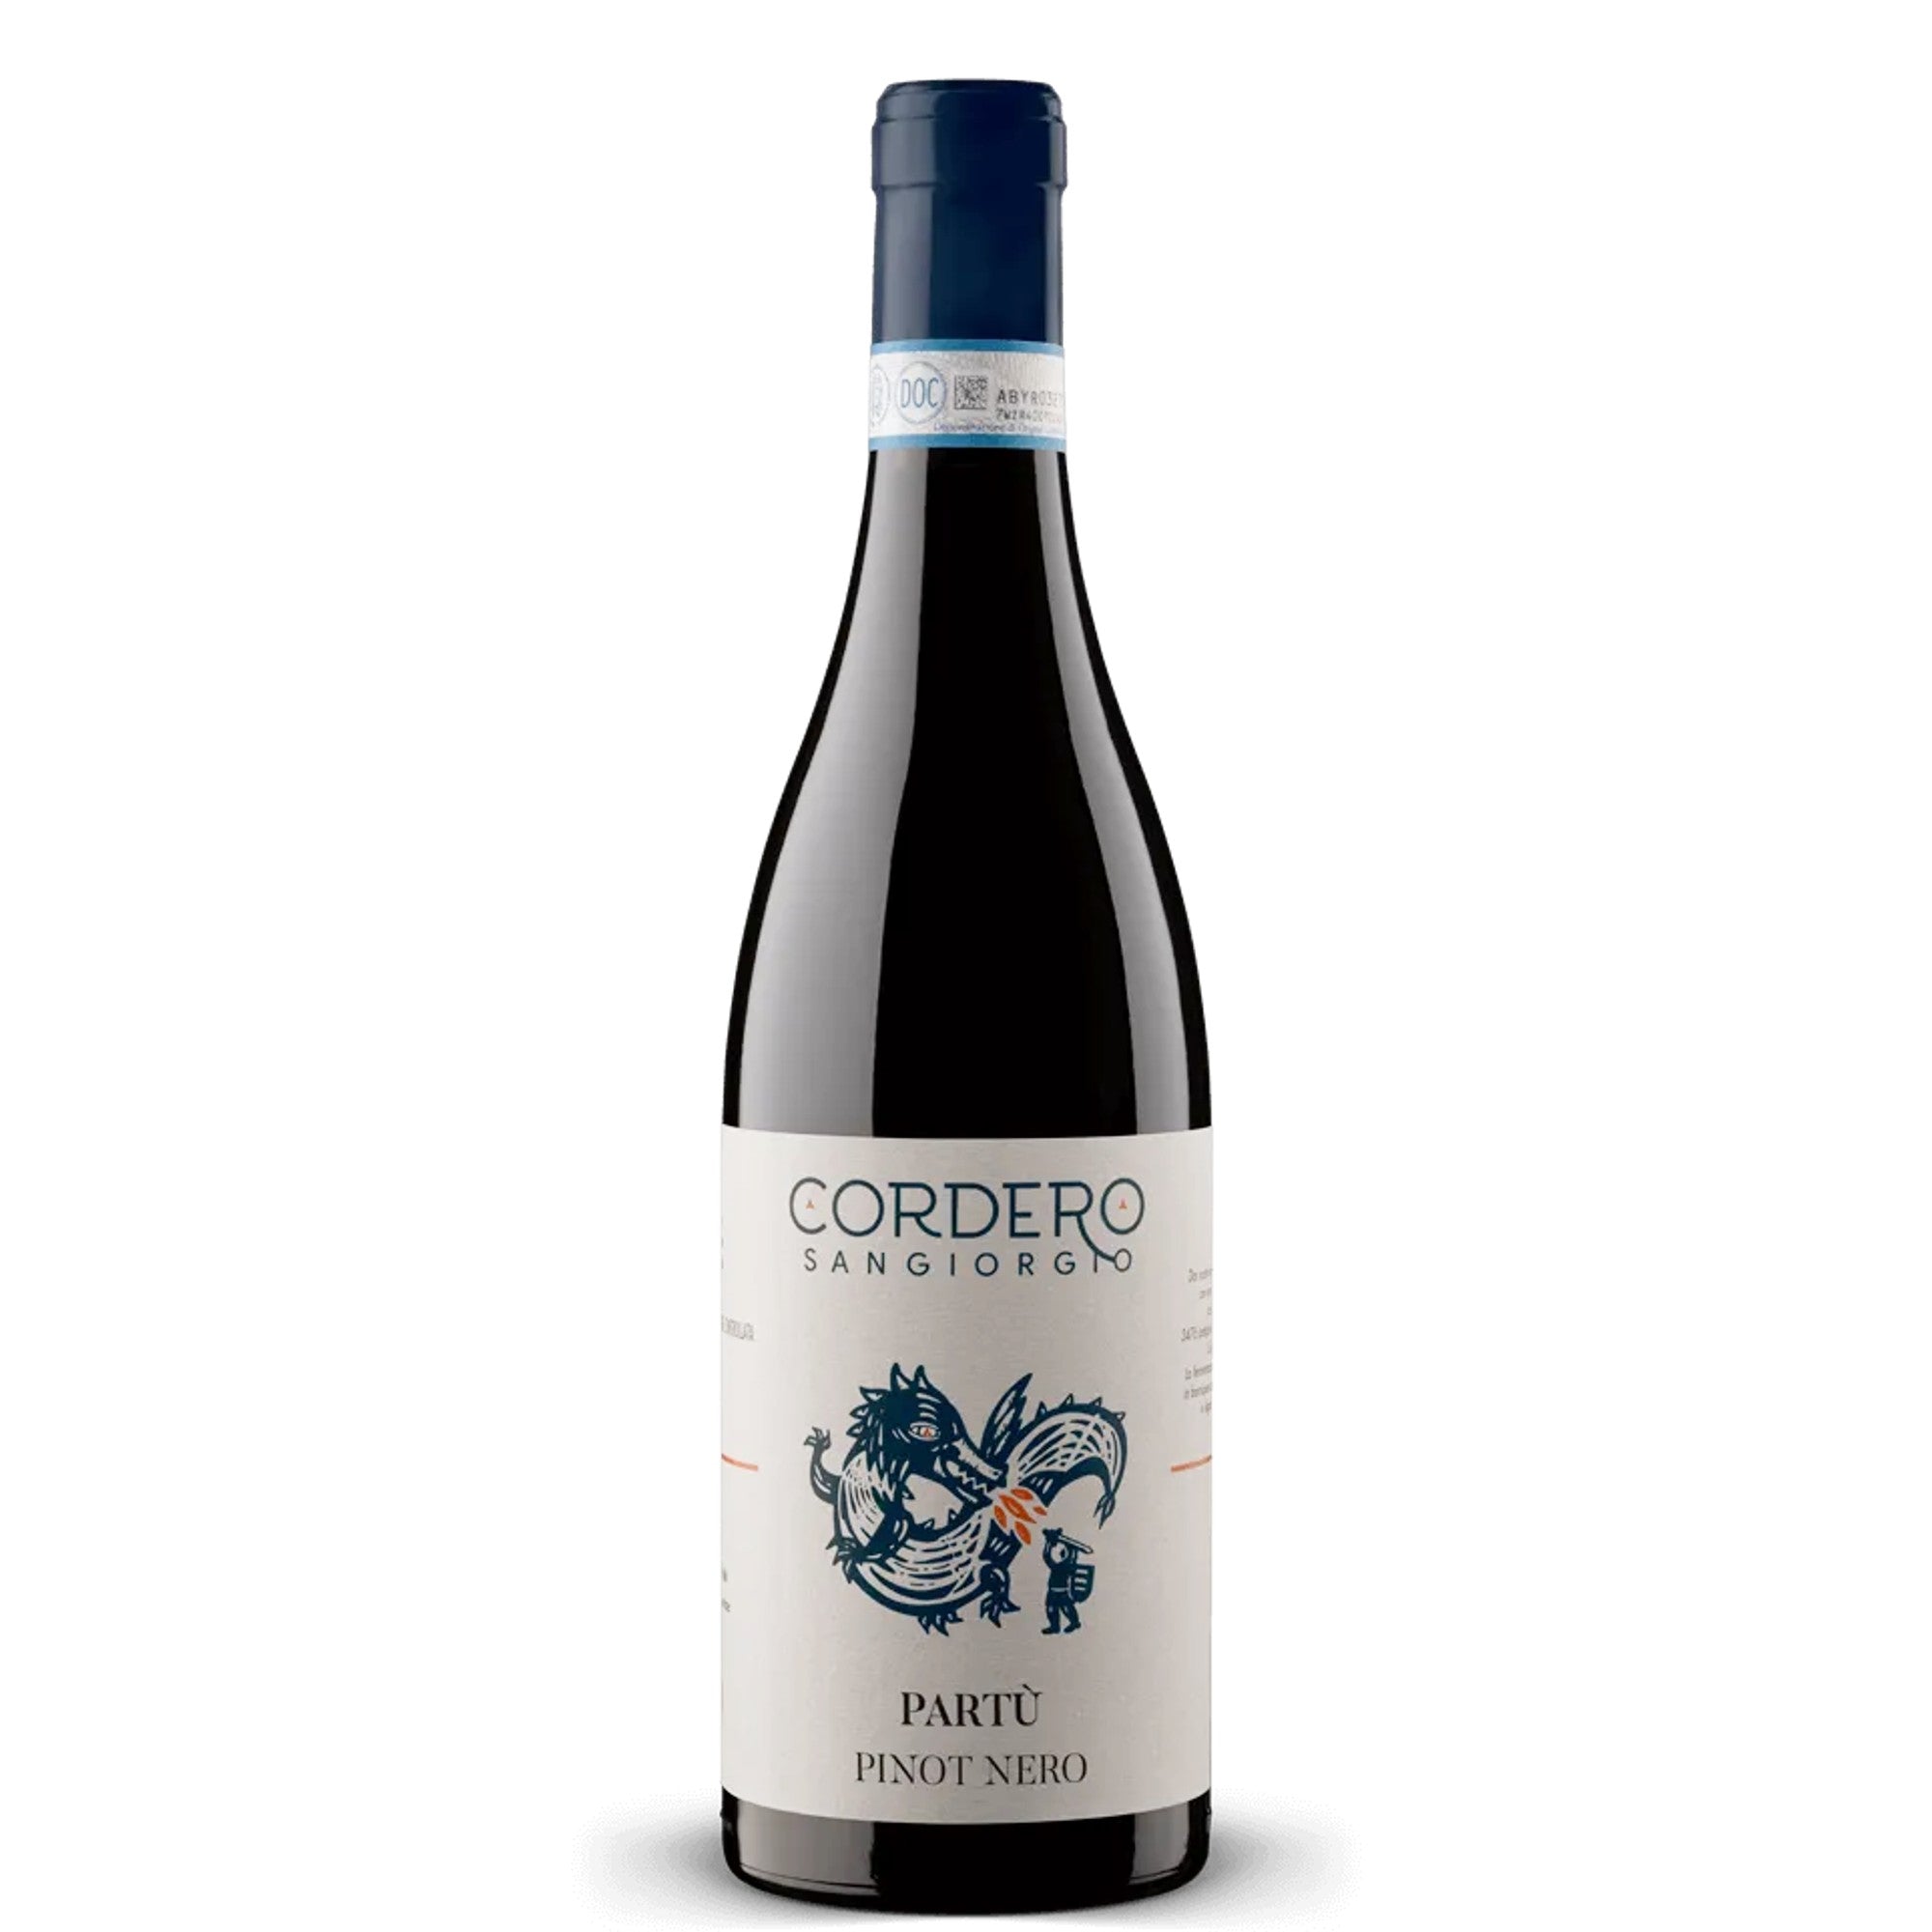 Partu&#39; Pinot nero Riserva Oltrepò Pavese 2021 - Cordero